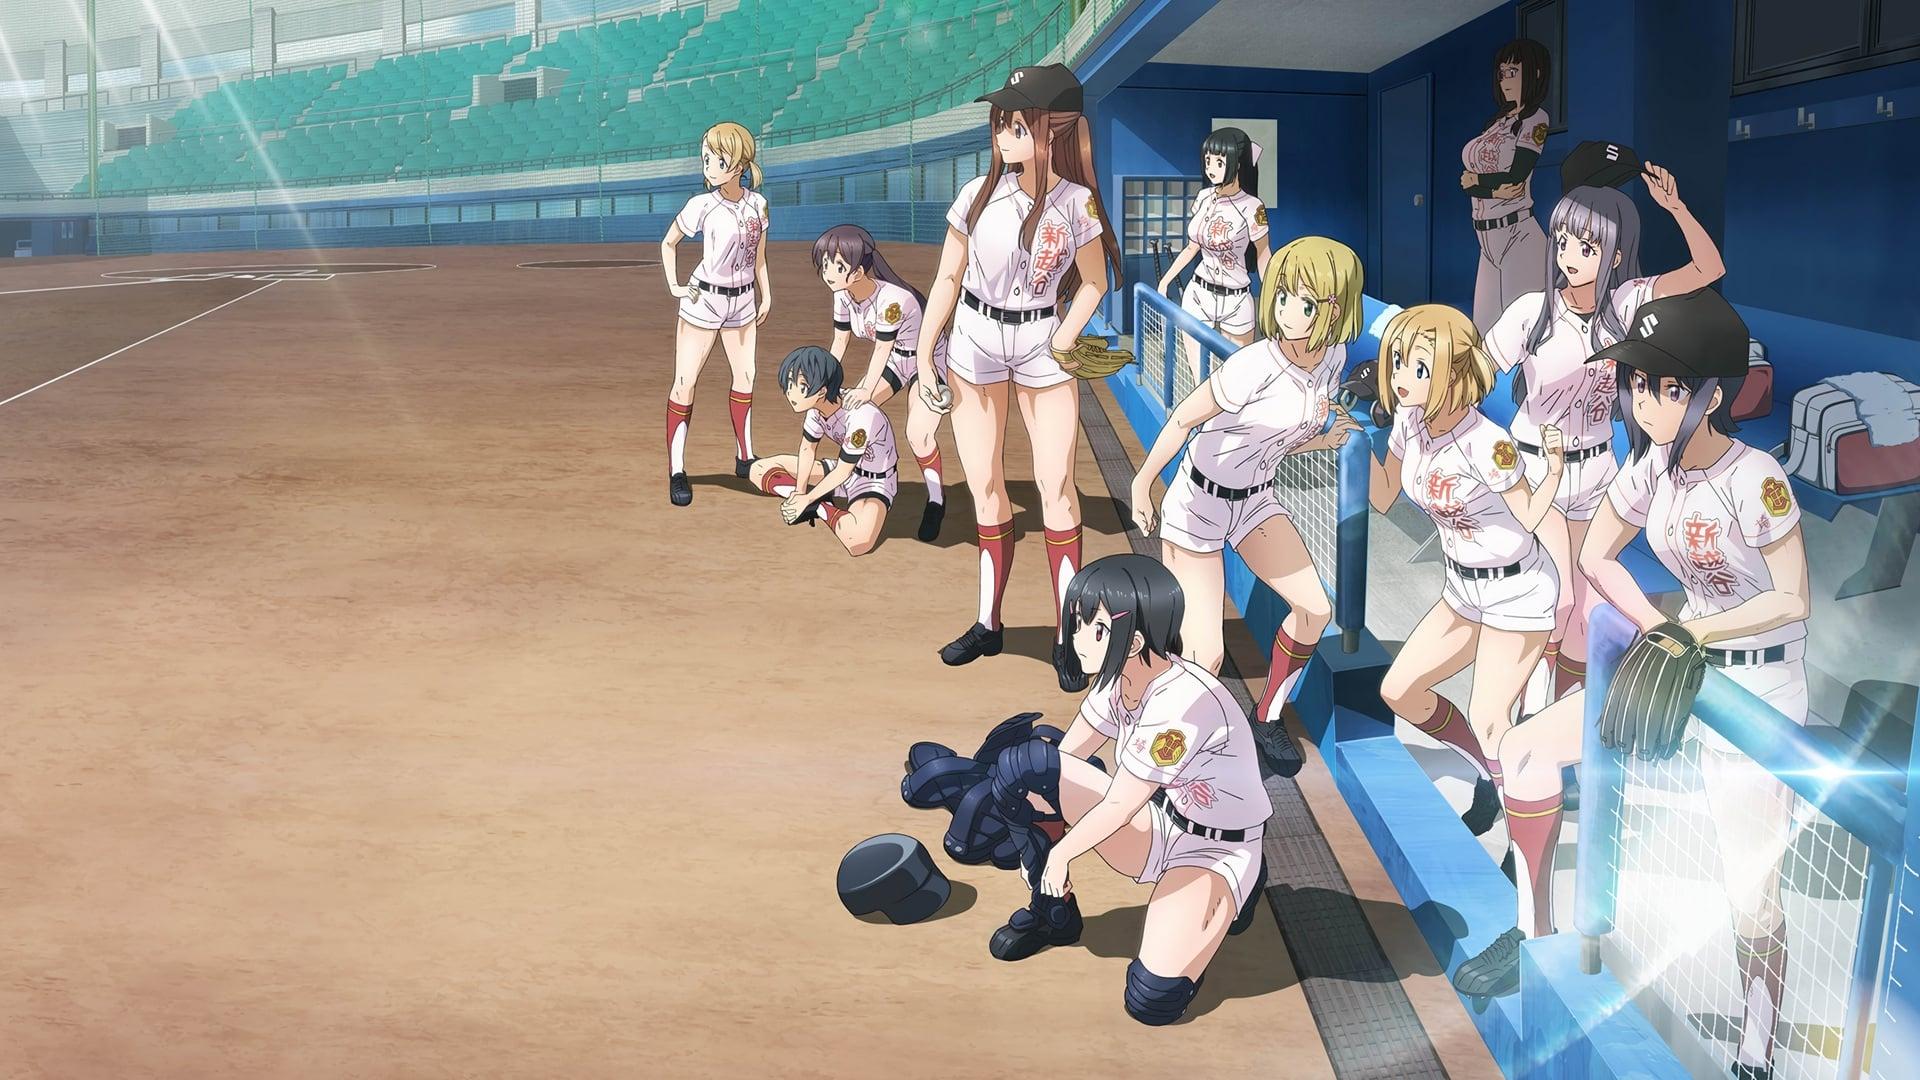 TAMAYOMI: The Baseball Girls backdrop